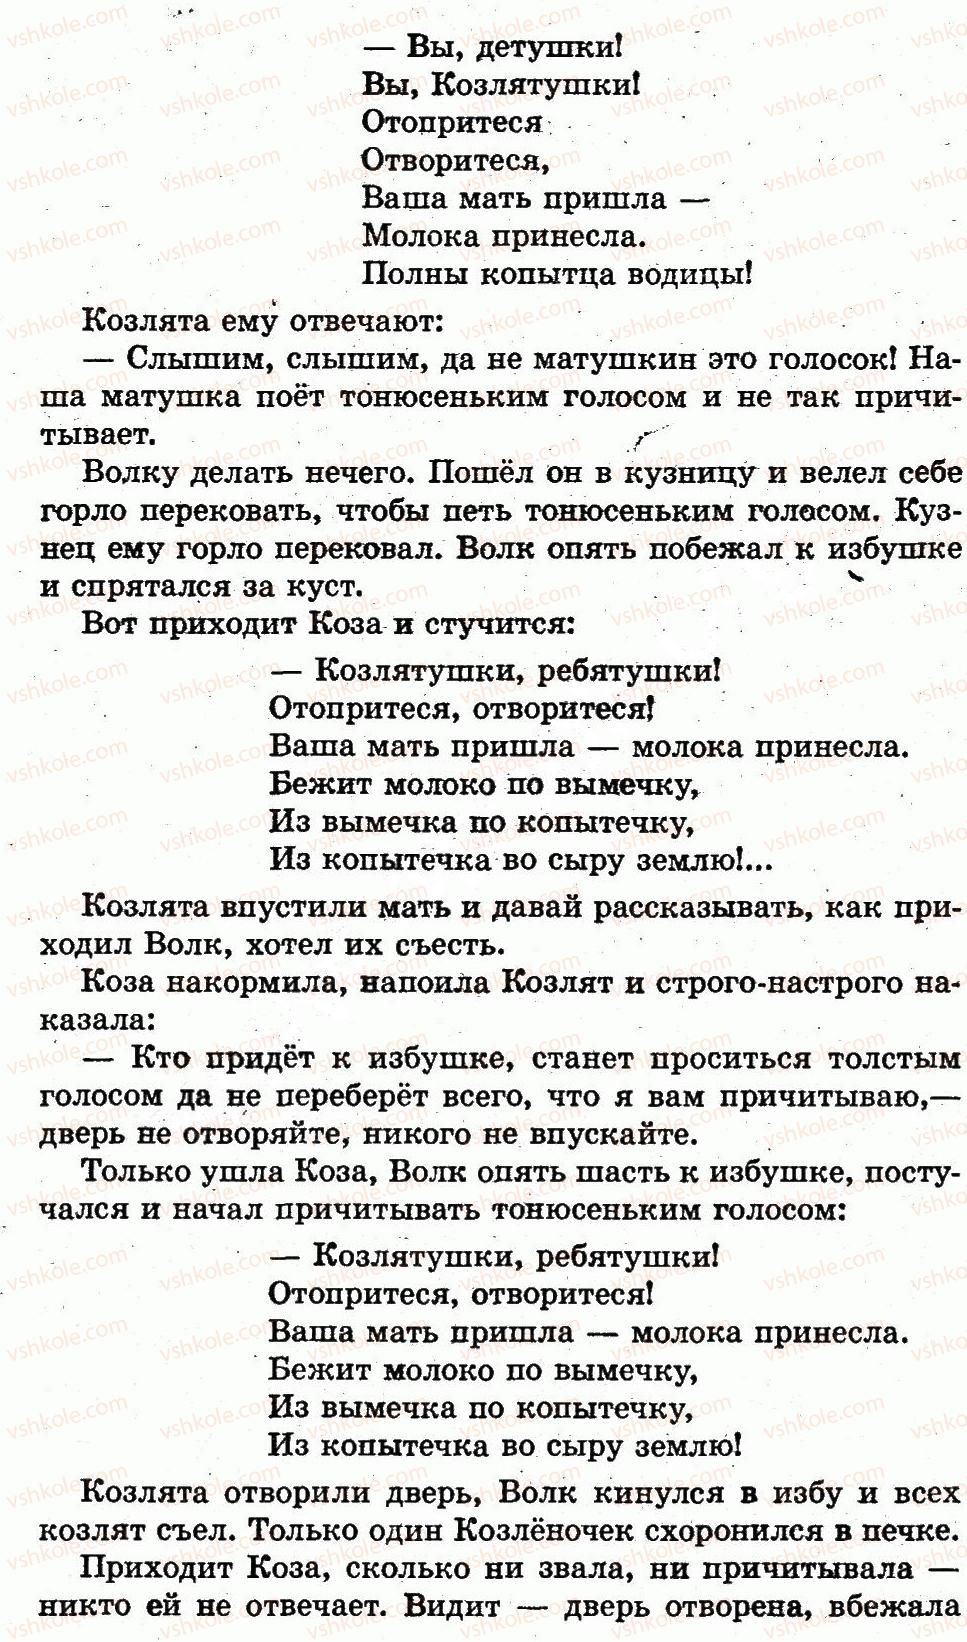 1-russkij-yazyk-in-lapshina-nn-zorka-2012--semya-страница58-rnd1454.jpg